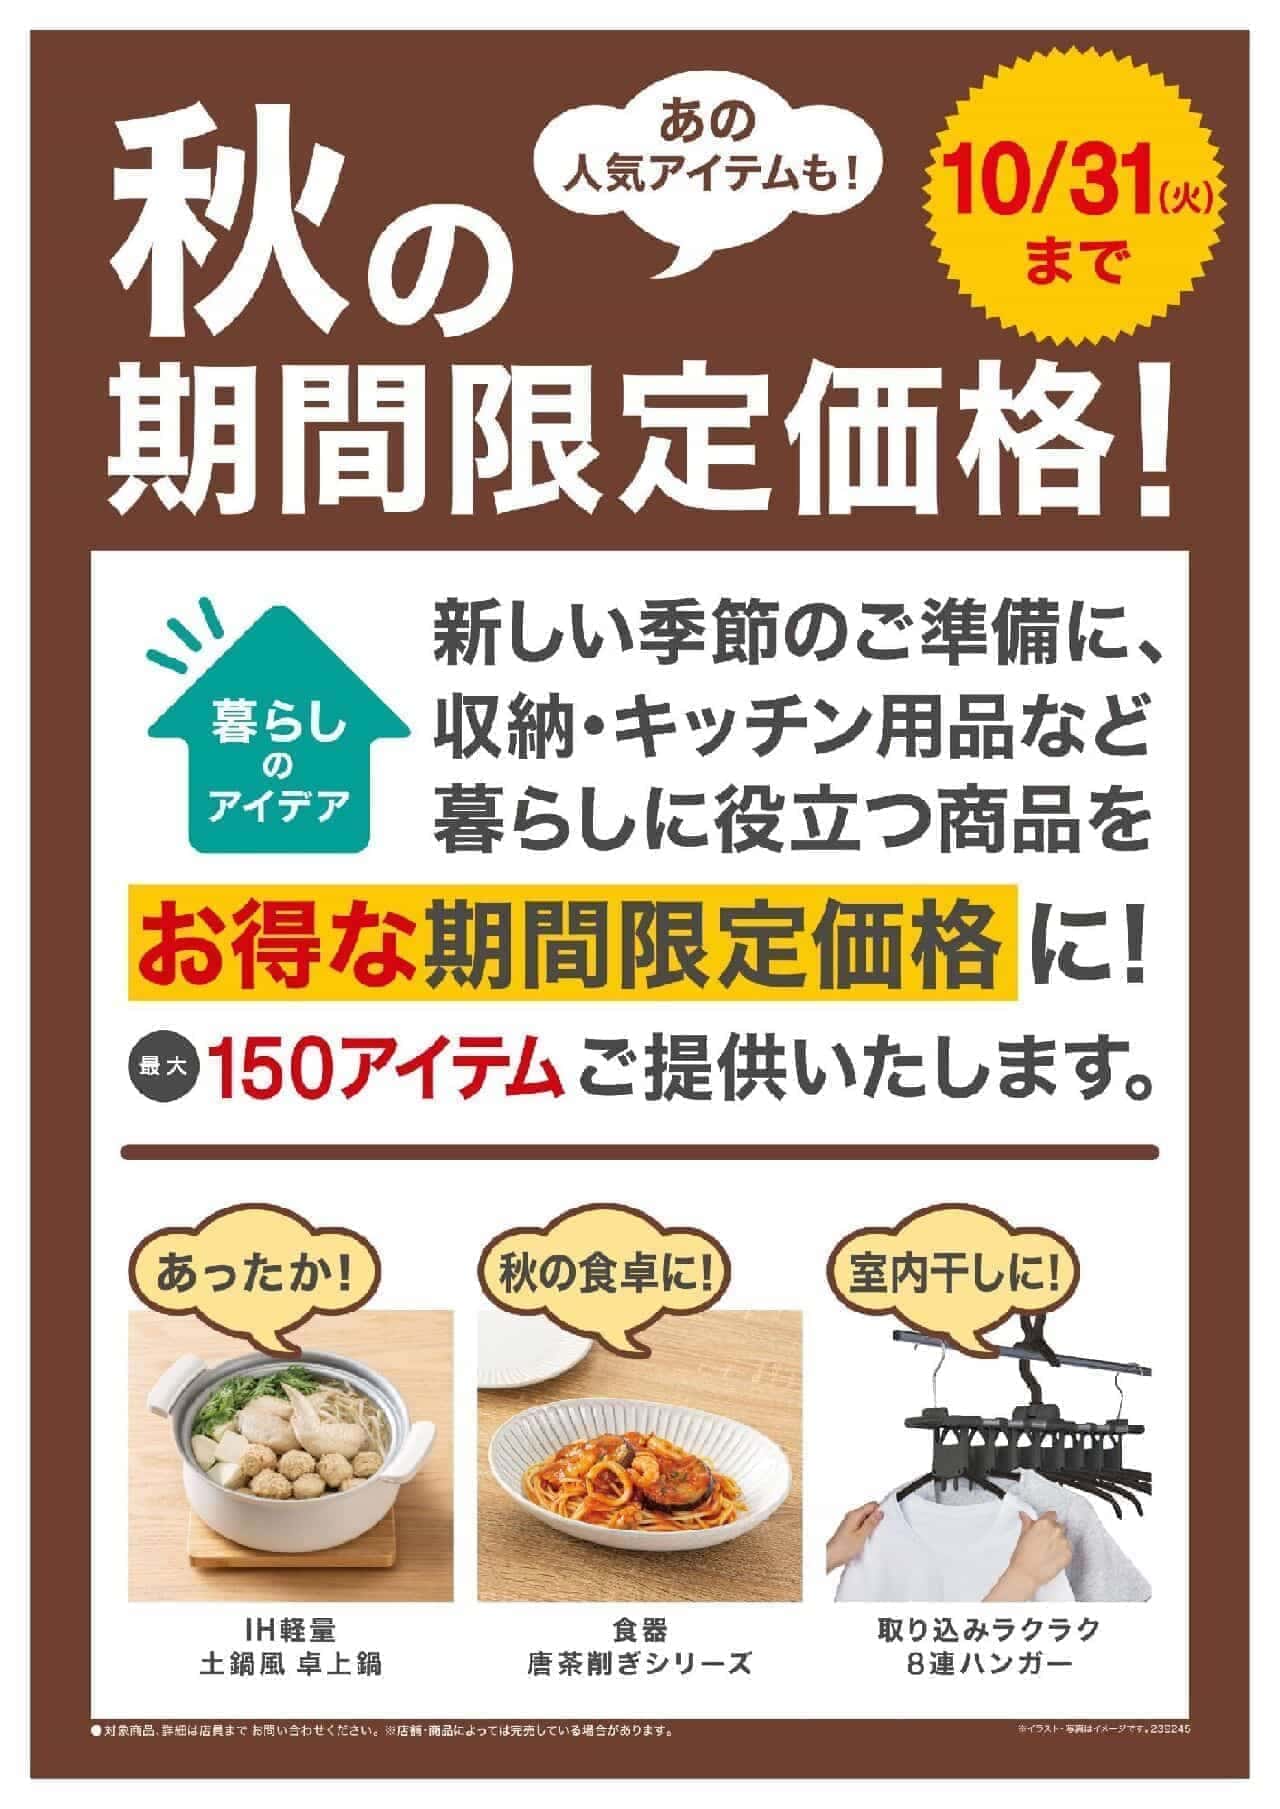 Nitori interior goods "limited time price".